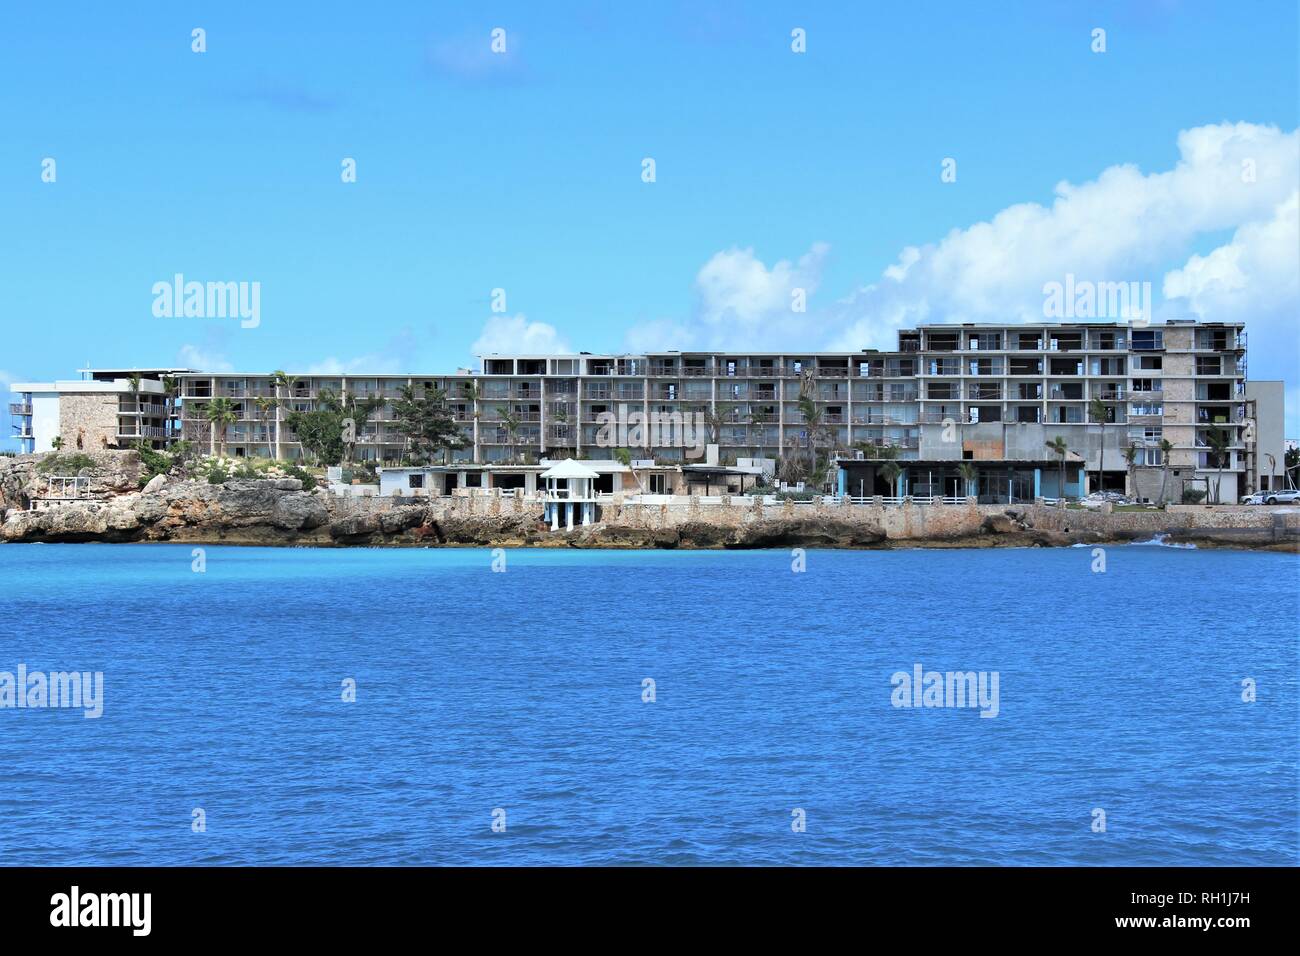 Maho Bay, Saint-Martin - 27 Février 2018 : les ruines de l'hôtel Sonesta Beach Resort Hotel, cinq mois après l'ouragan qui a détruit l'Irma. Banque D'Images